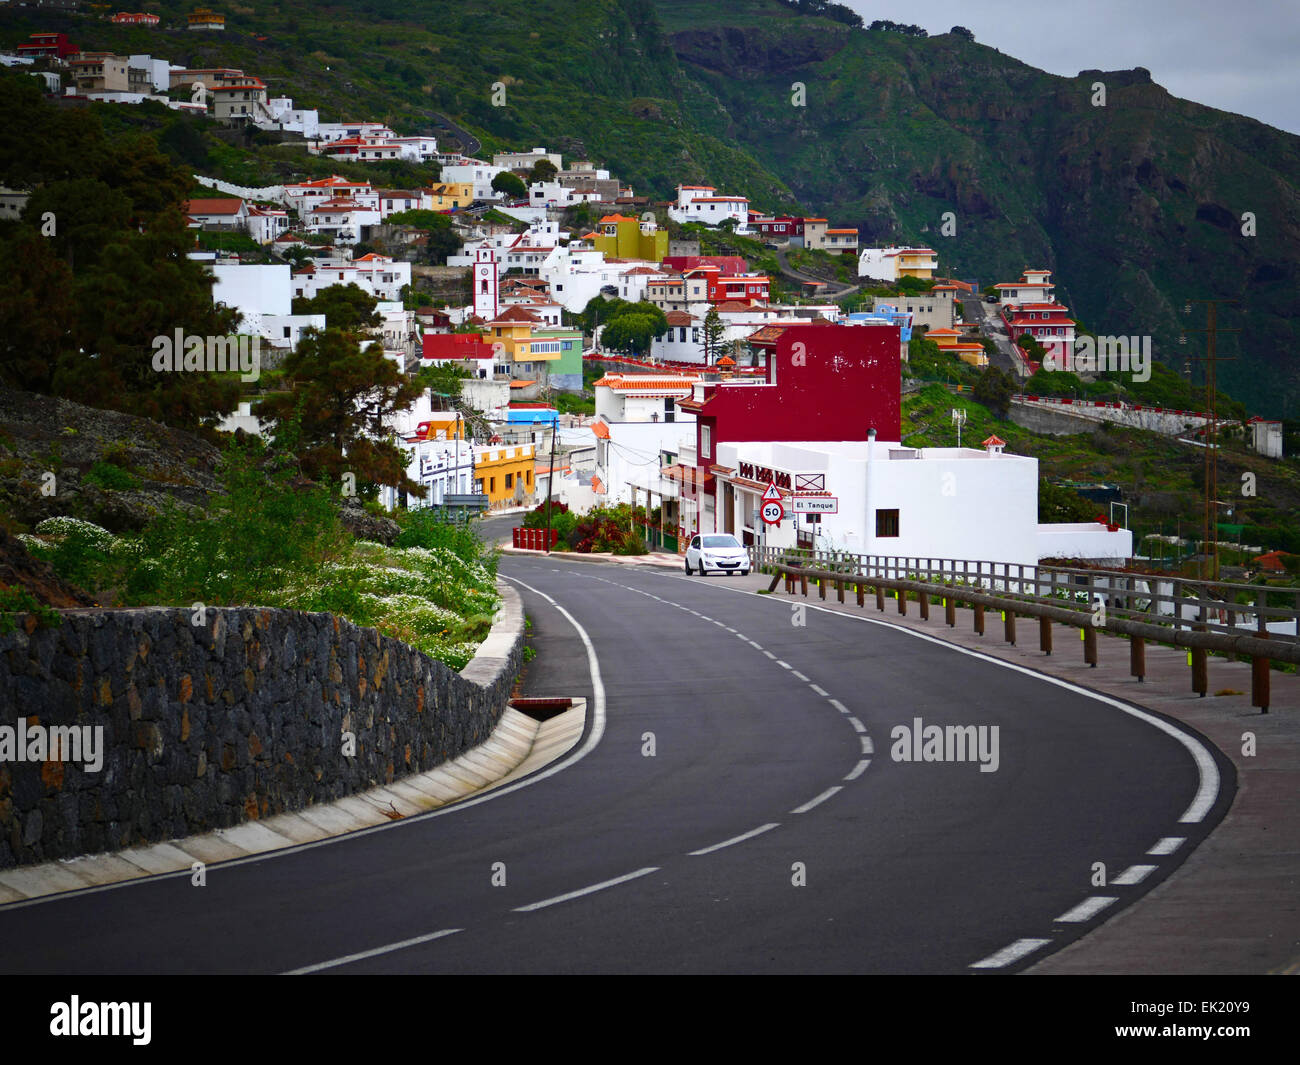 Traffic road sign Tenerife island Canary islands Spain Stock Photo